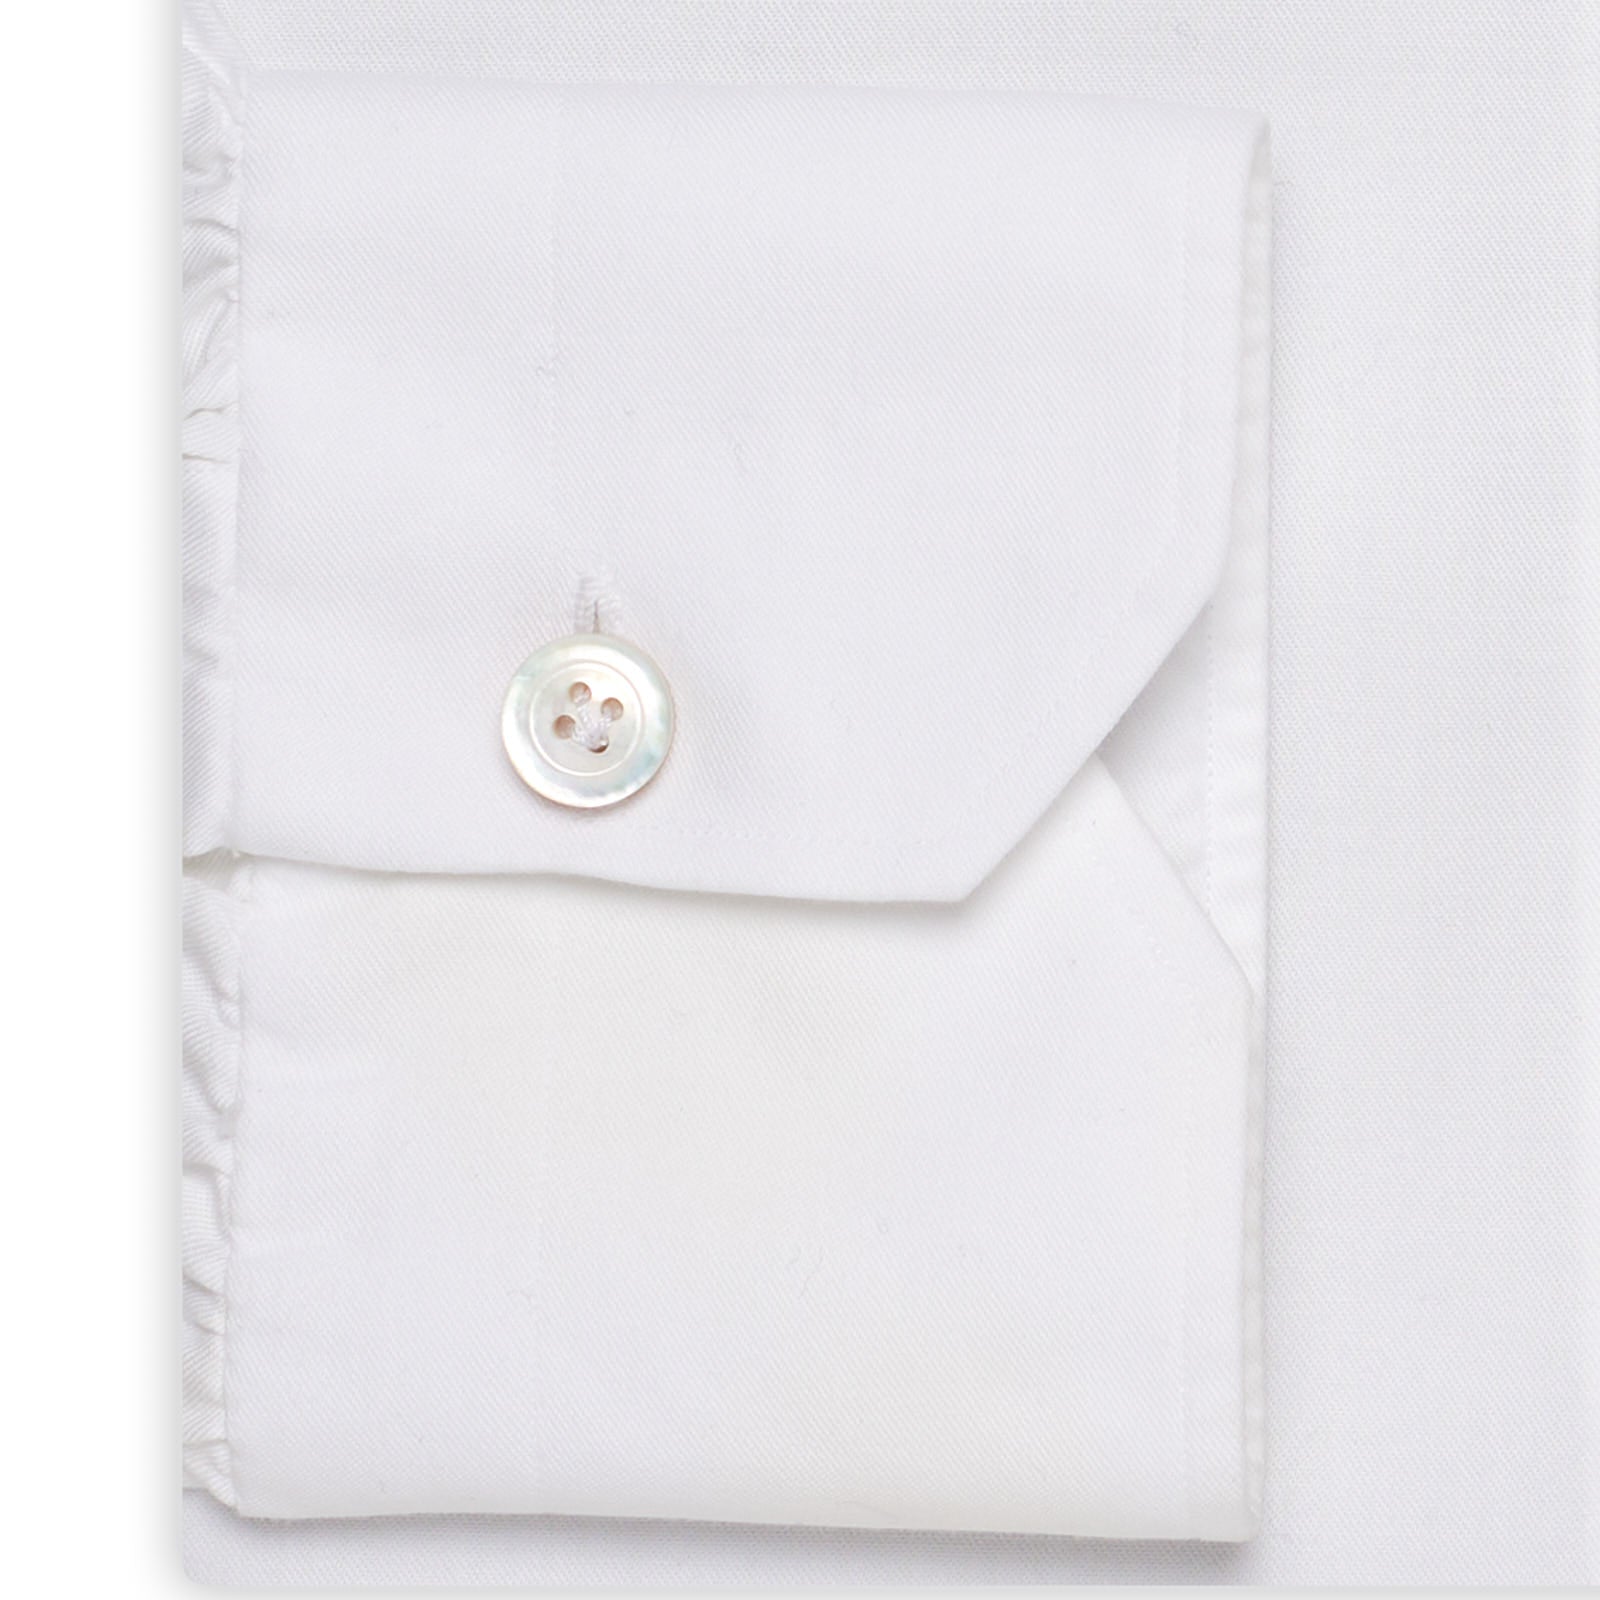 KITON Handmade Bespoke White Twill Cotton Dress Shirt EU 40 NEW US 15.75 KITON